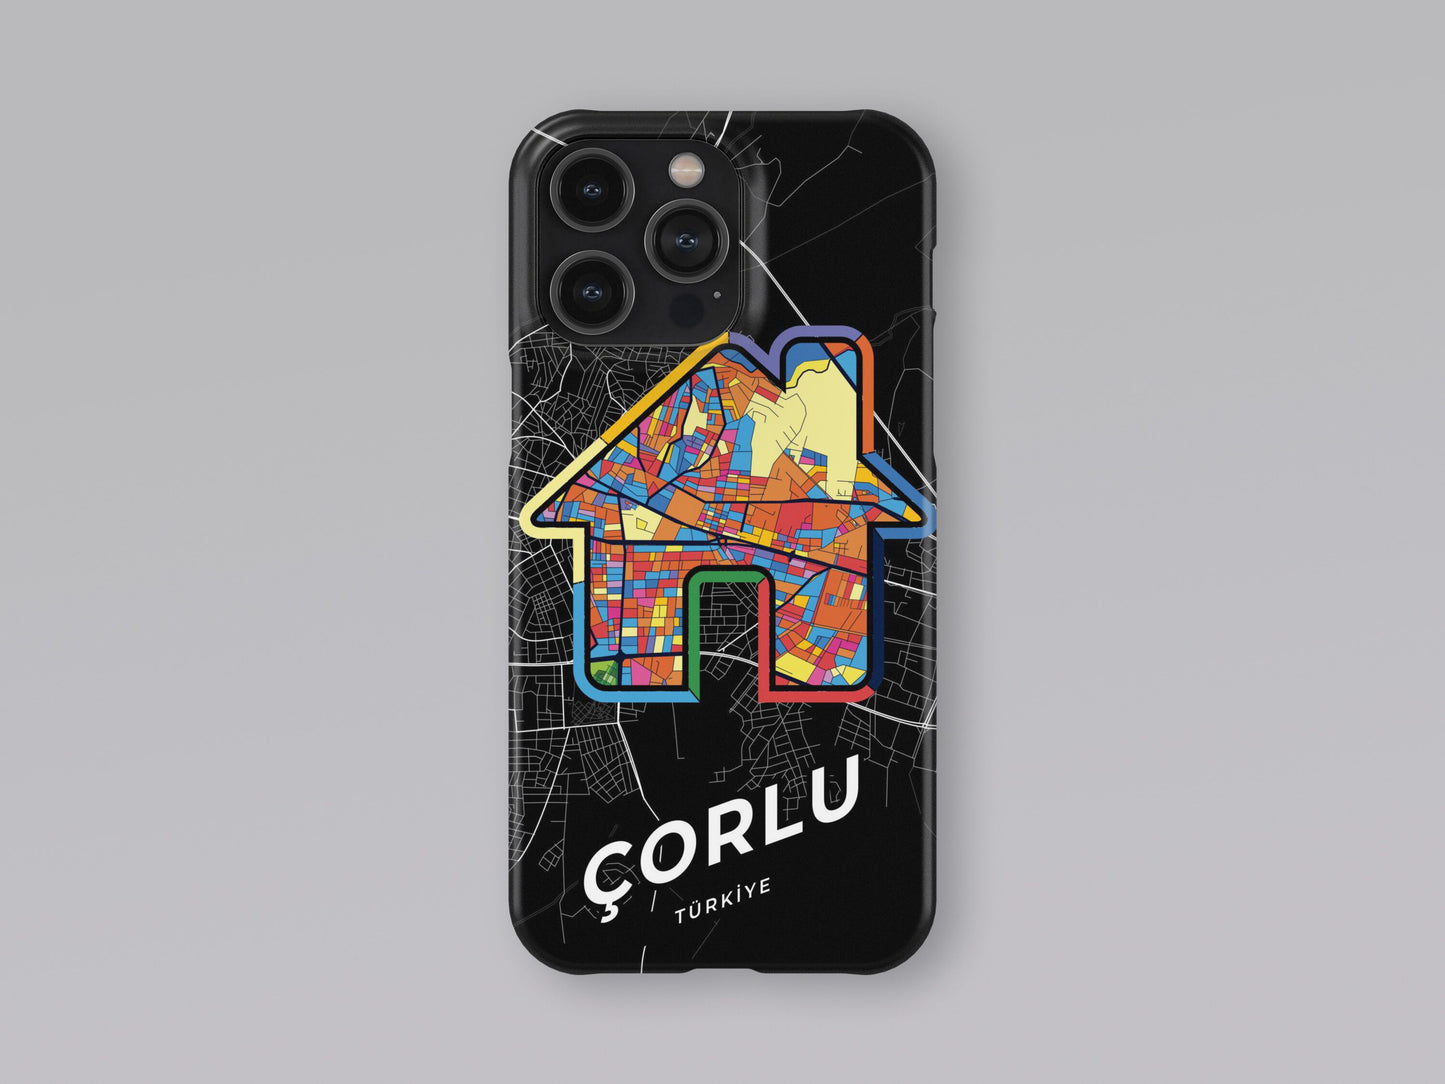 Çorlu Turkey slim phone case with colorful icon. Birthday, wedding or housewarming gift. Couple match cases. 3